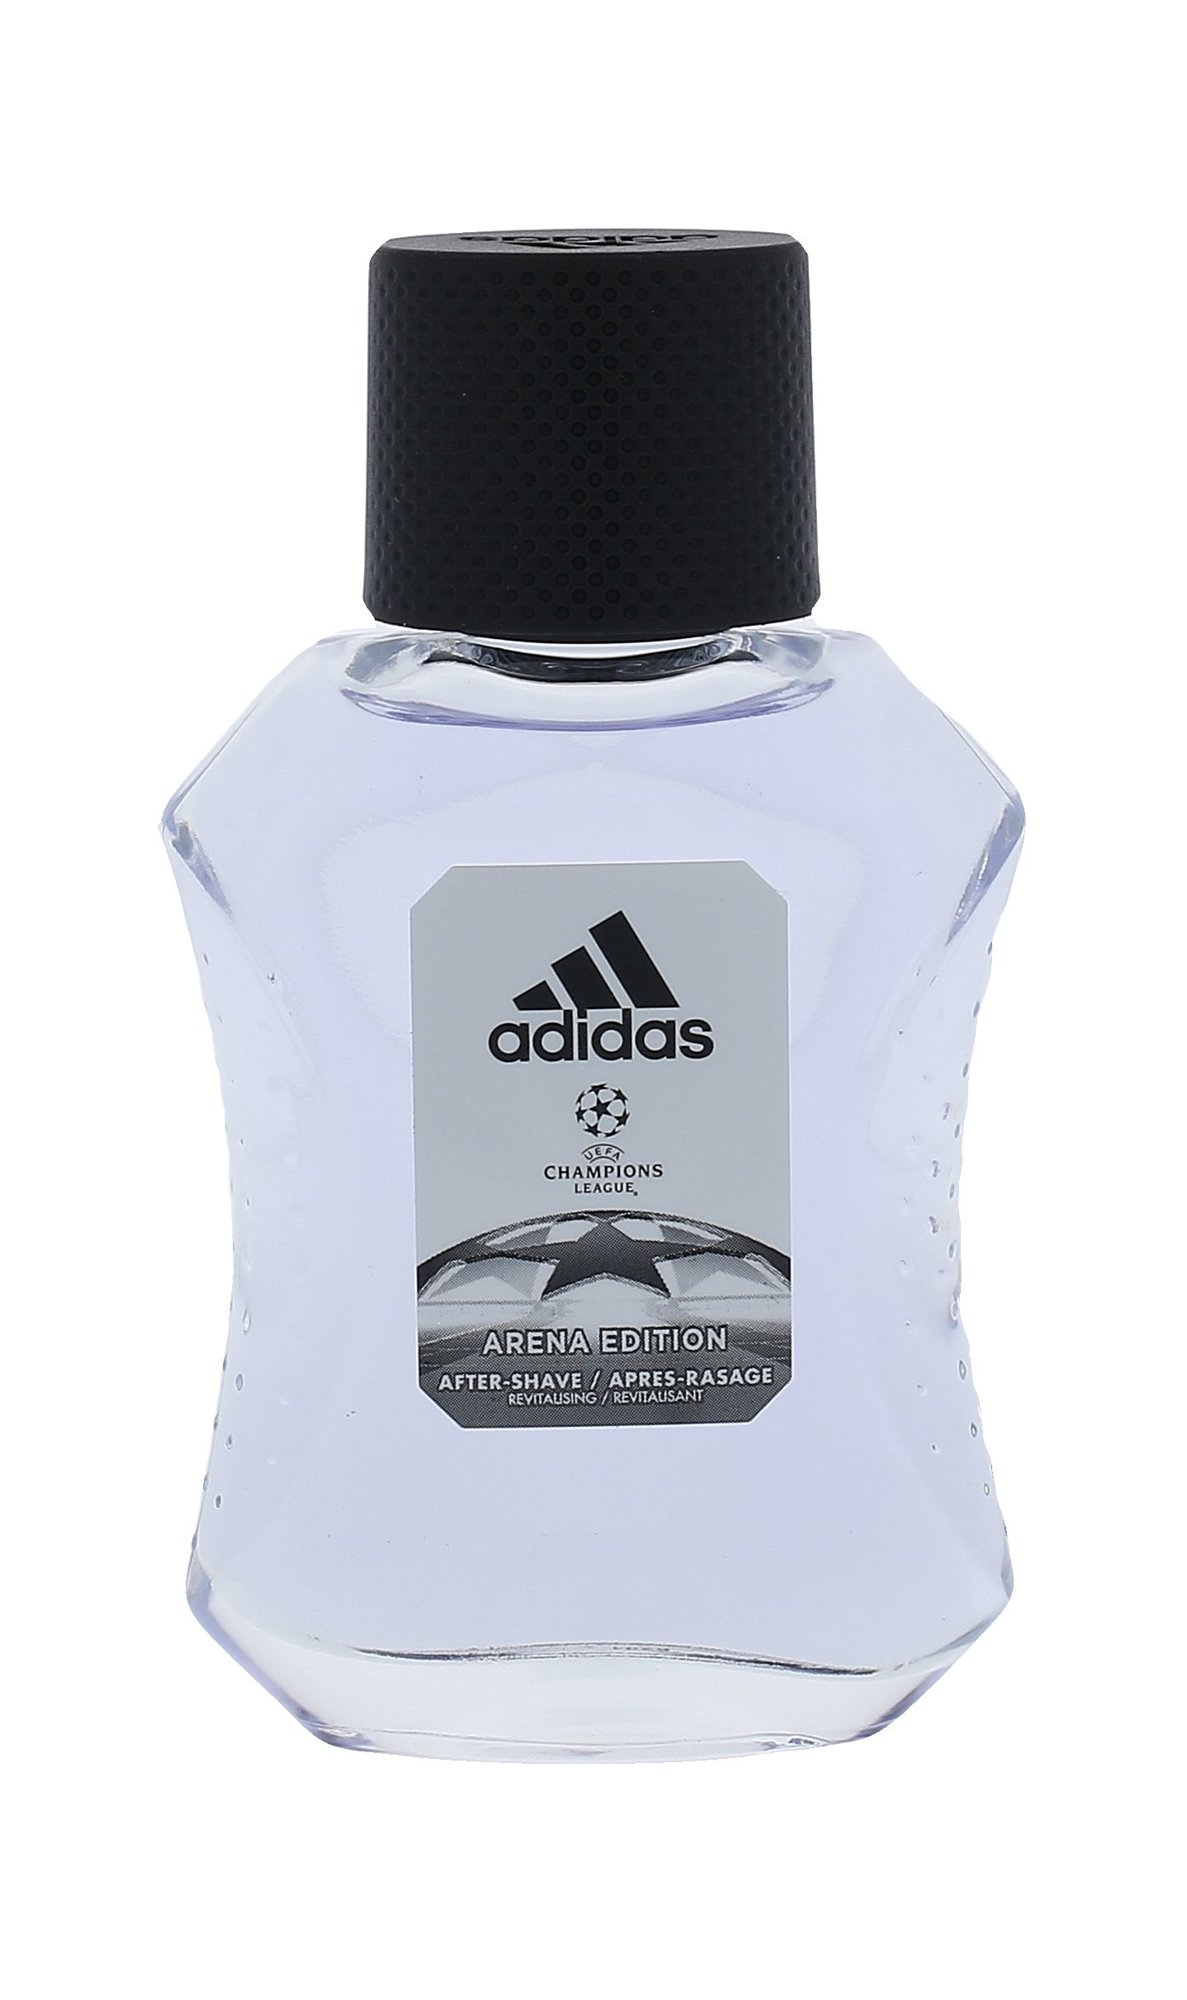 Adidas UEFA Champions League Arena Edition 50ml vanduo po skutimosi